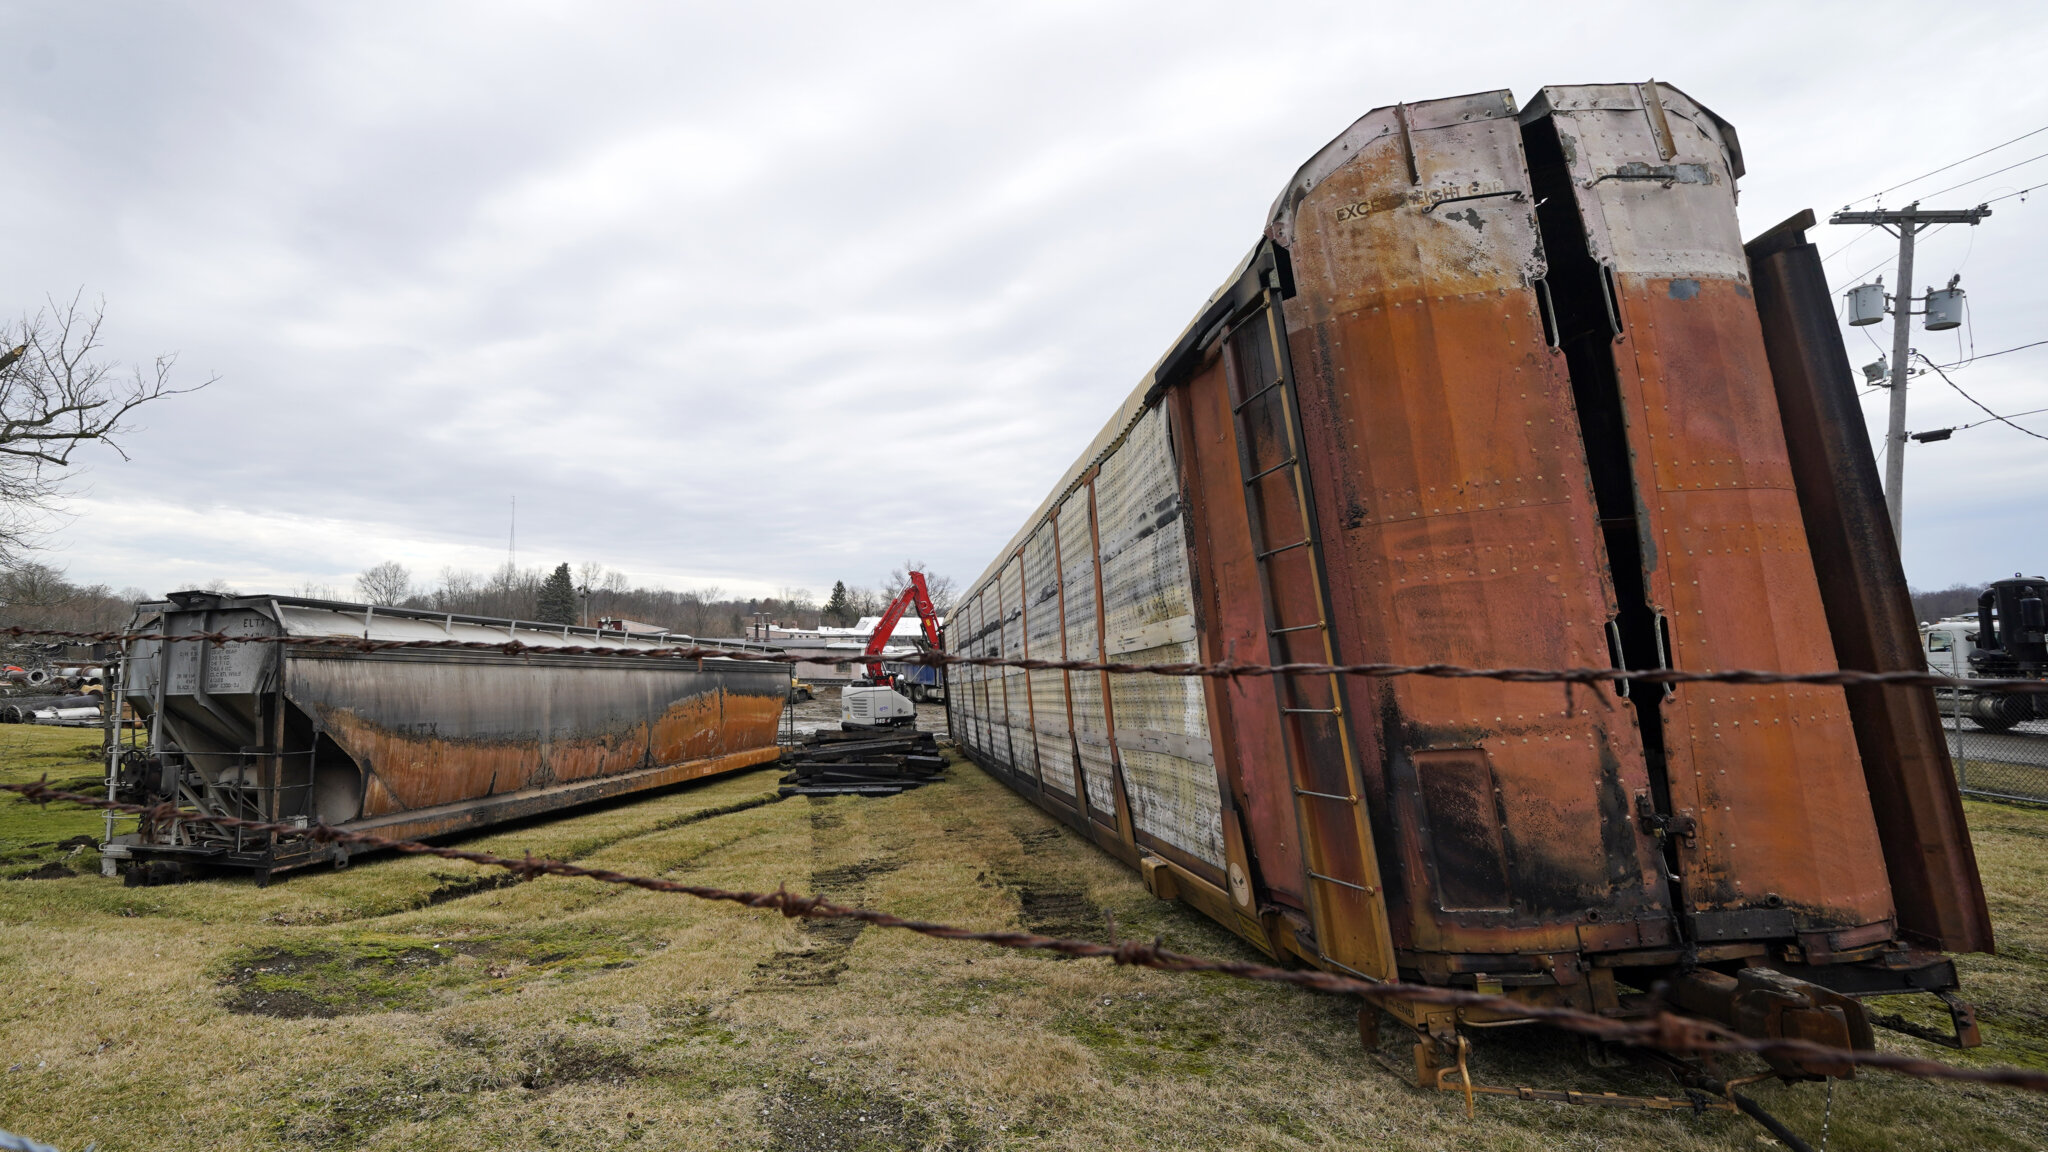 Upset Ohio town residents seek answers over train derailment Metro US